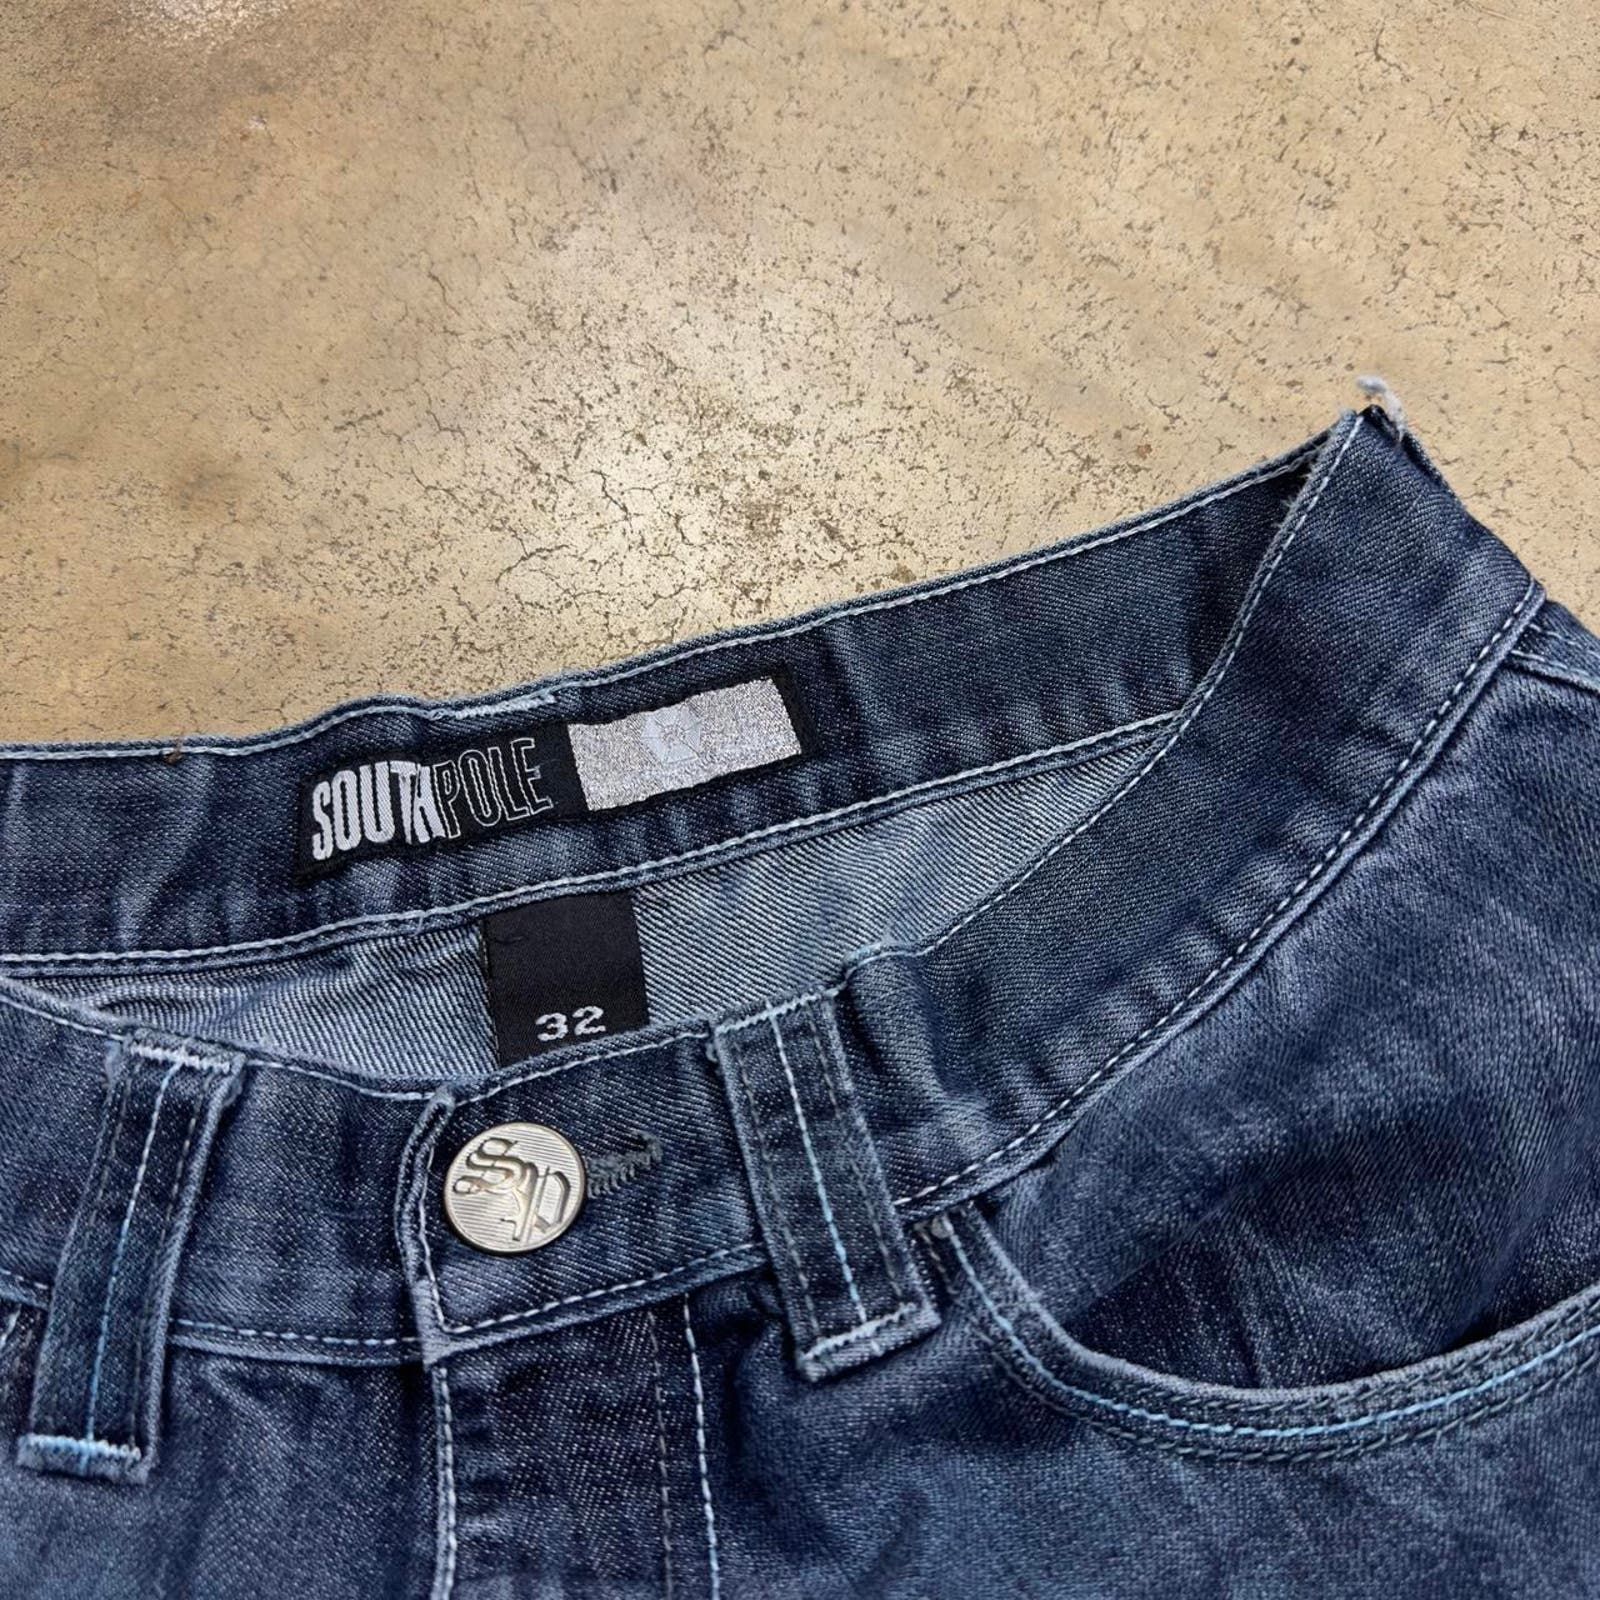 Southpole Southpole Y2K Baggy Grunge Style Streetwear Denim Jeans Size US 32 / EU 48 - 5 Preview